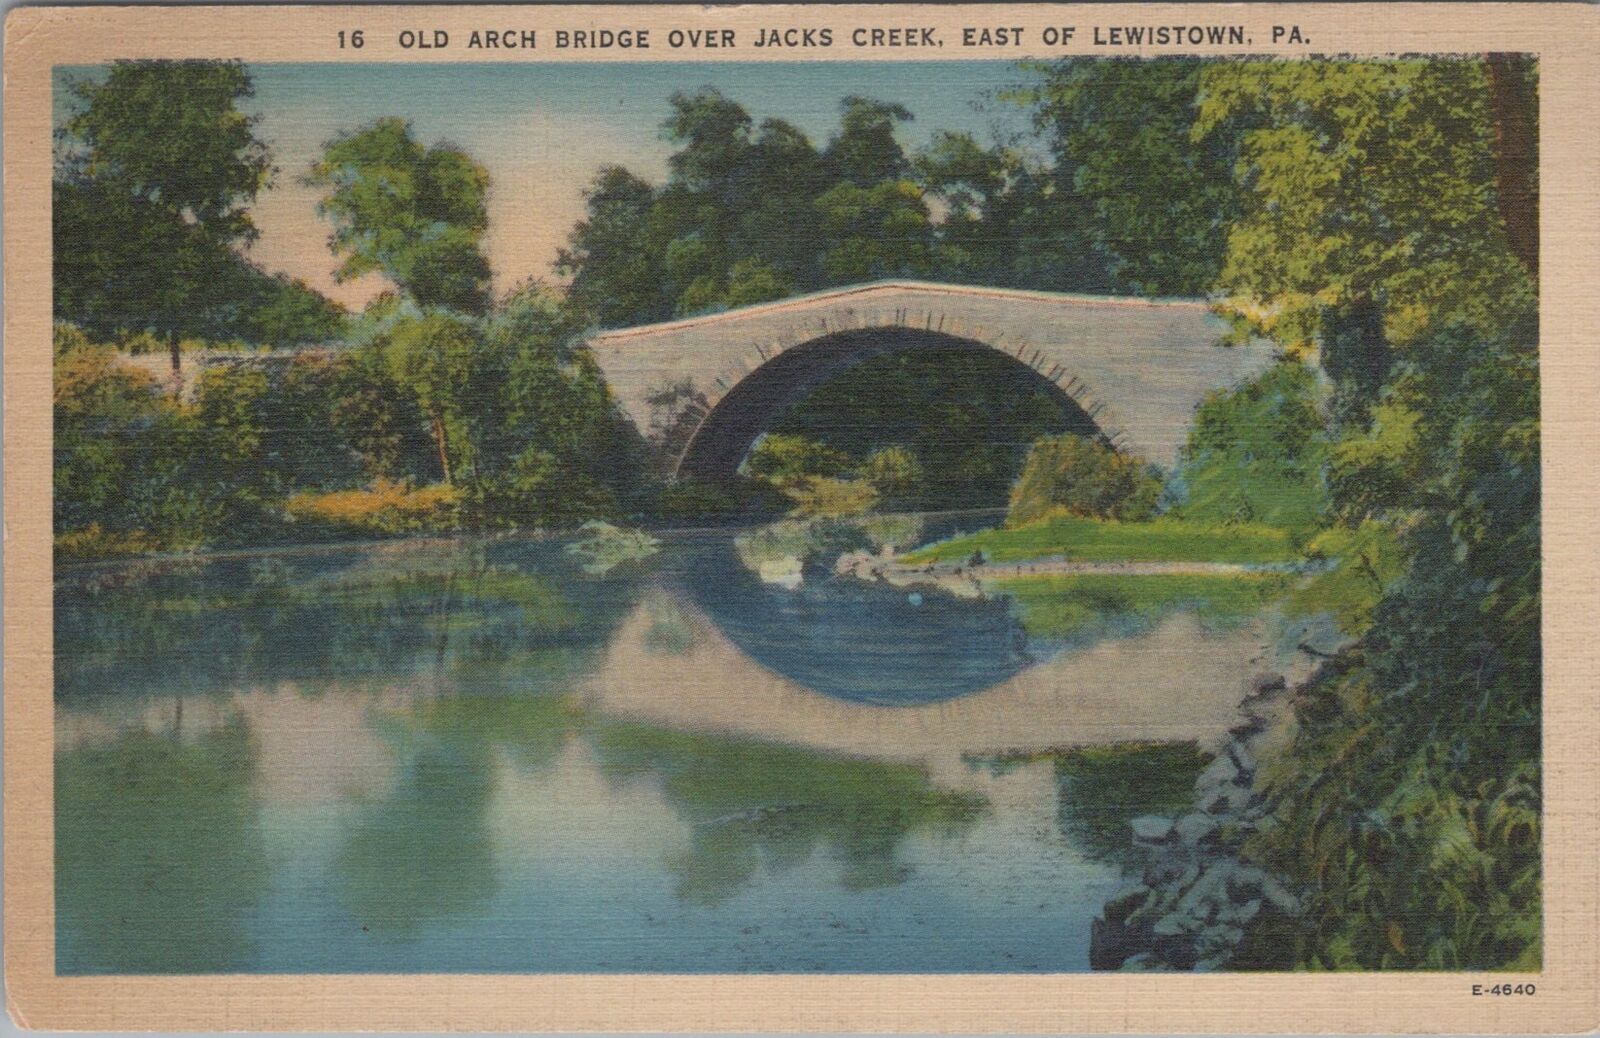 Old Arch Bridge Over Jacks Creek East of Lewistown PA Postcard,1941